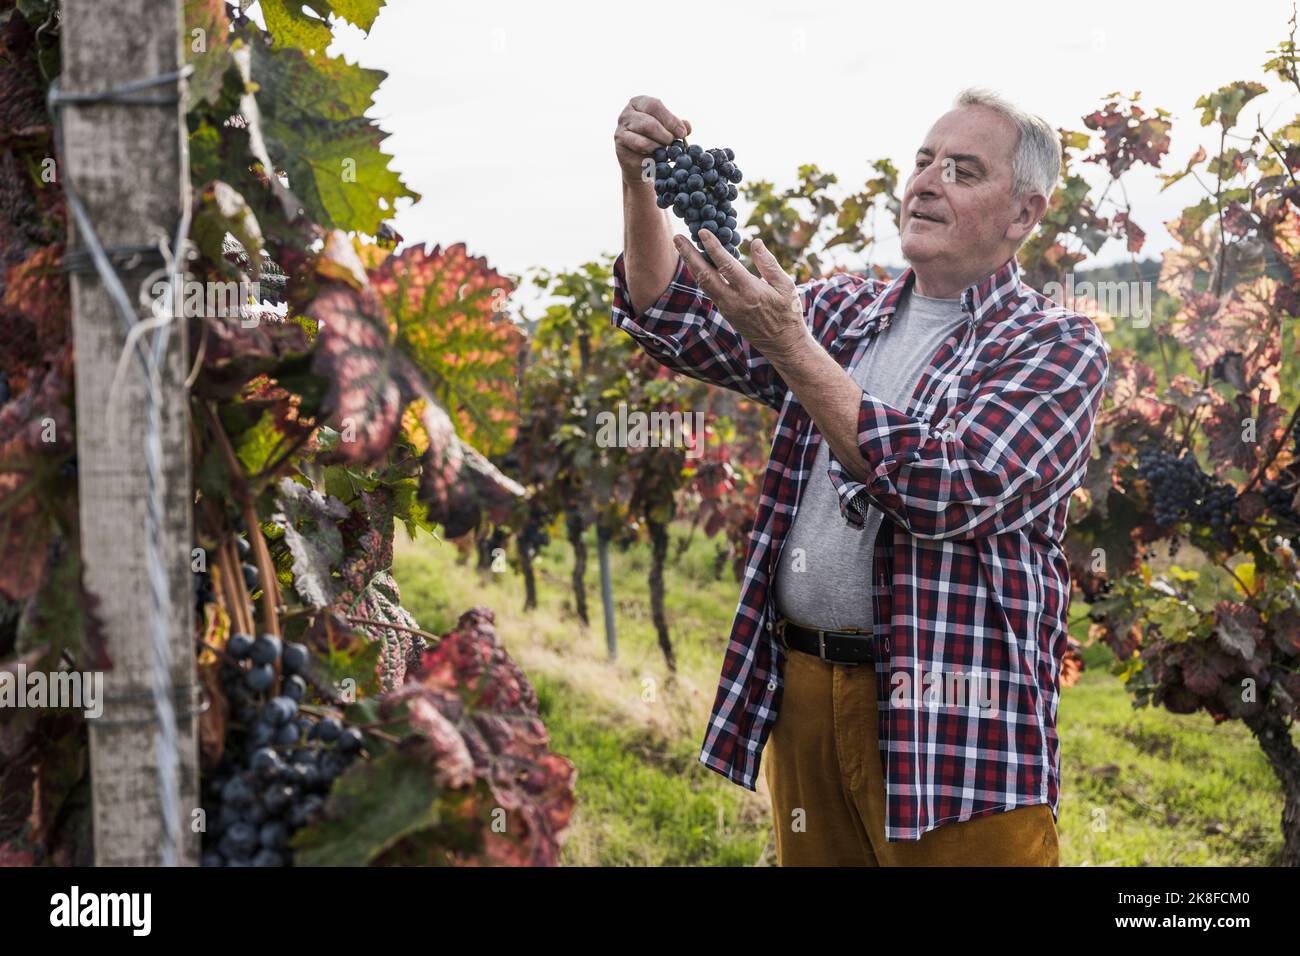 Senior farmer analyzing grapes in vineyard Stock Photo